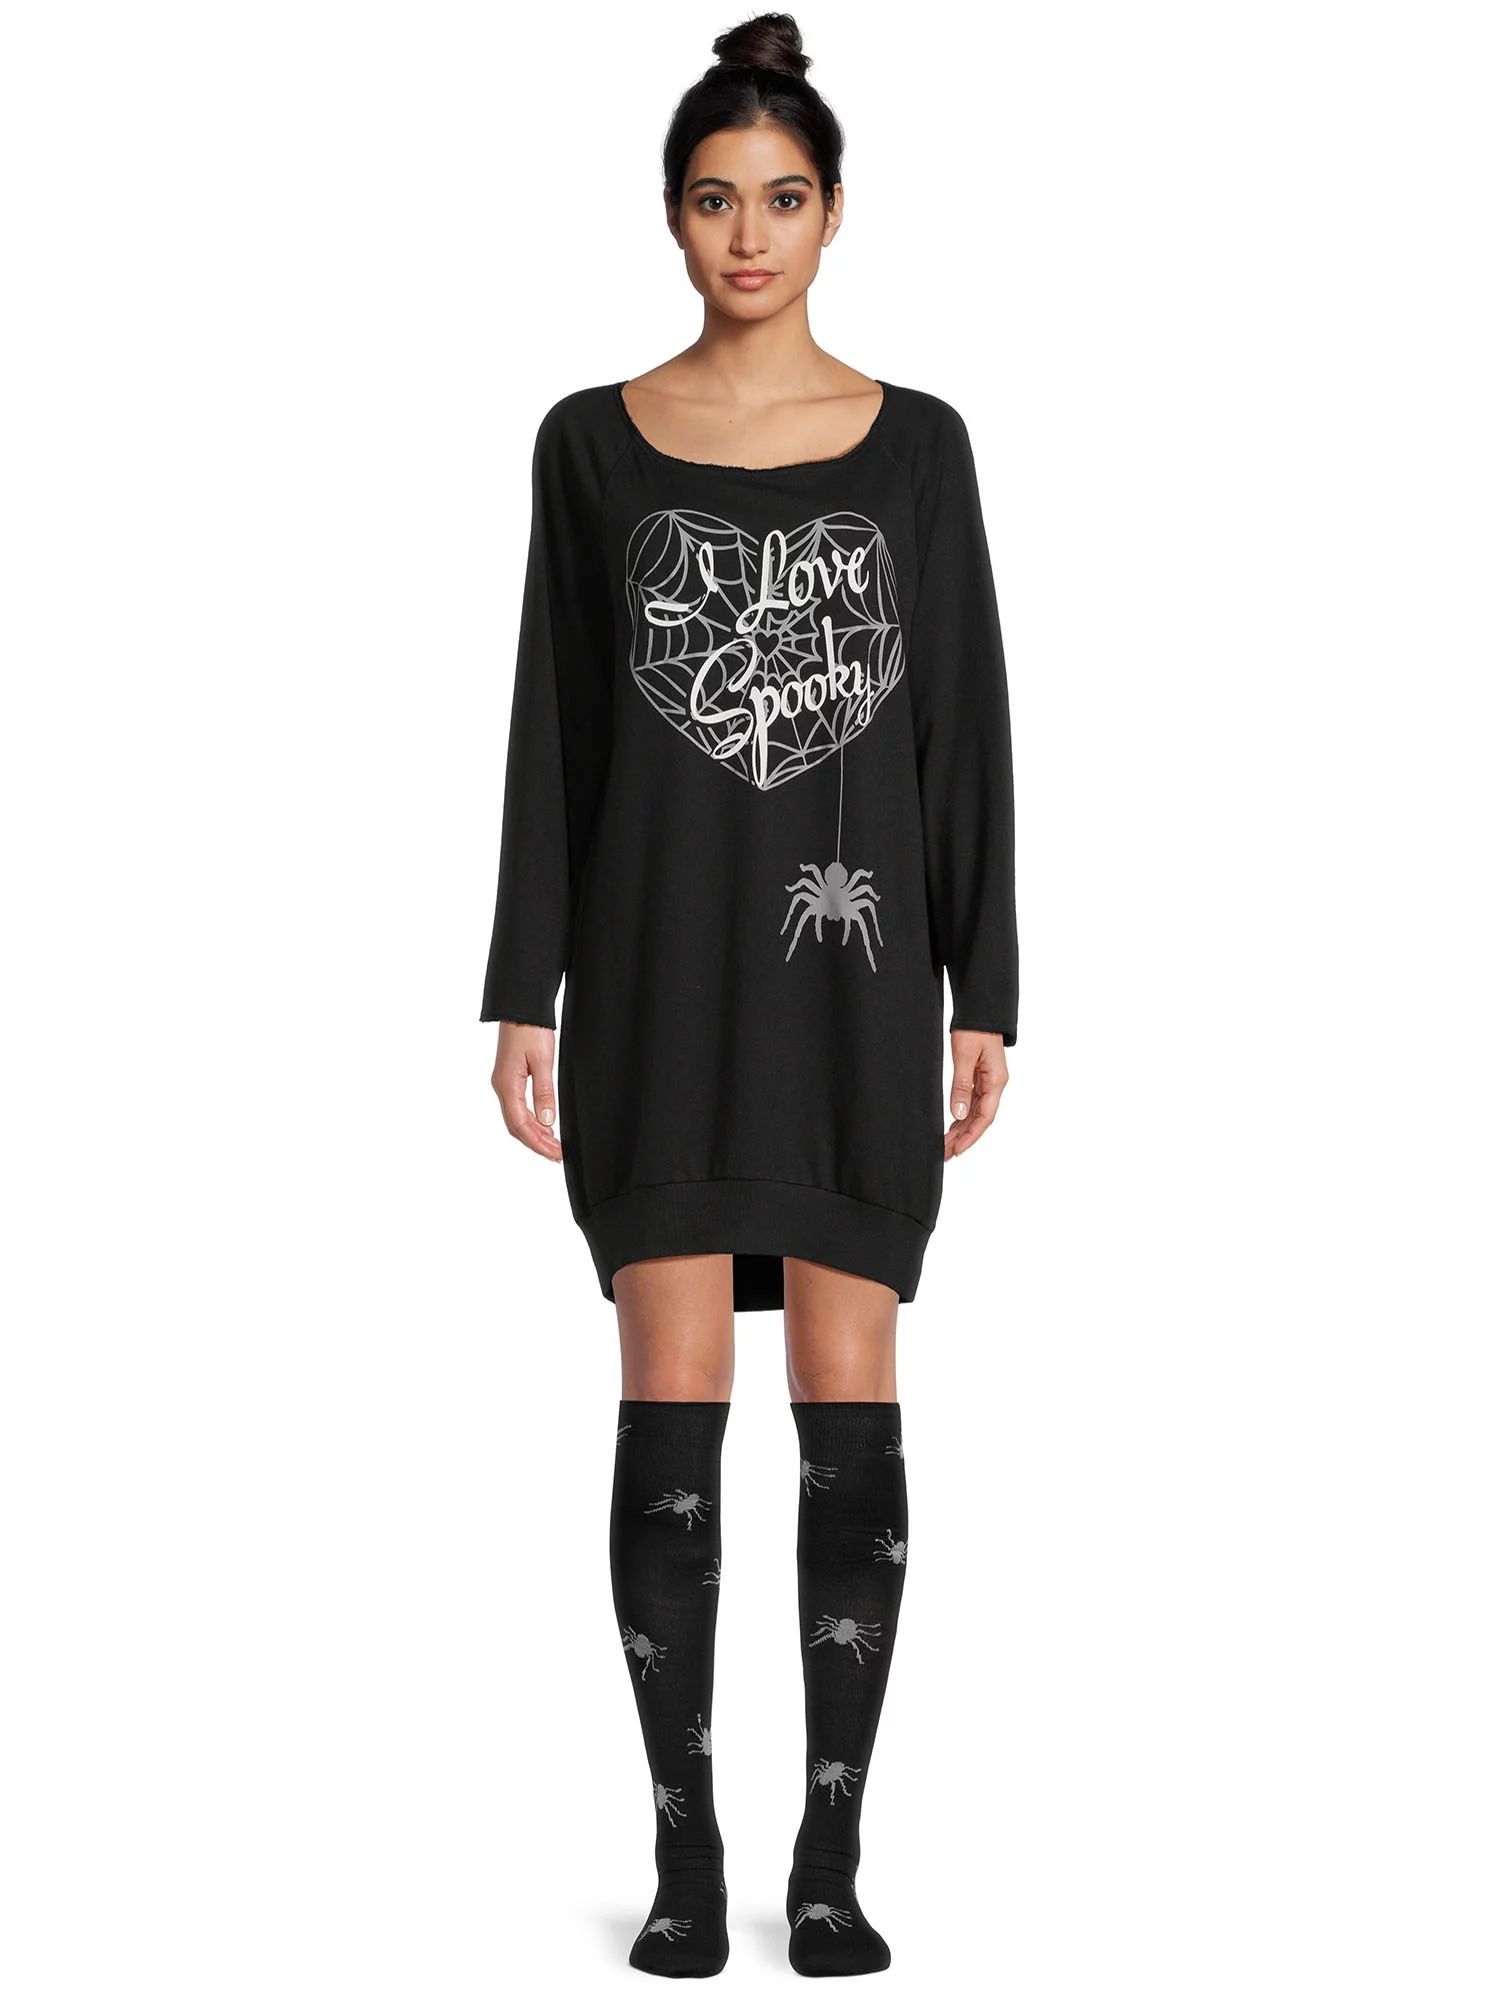 Way To Celebrate Women's Lounger Sleep Shirt with Socks, Sizes XS to 3X | Walmart (US)